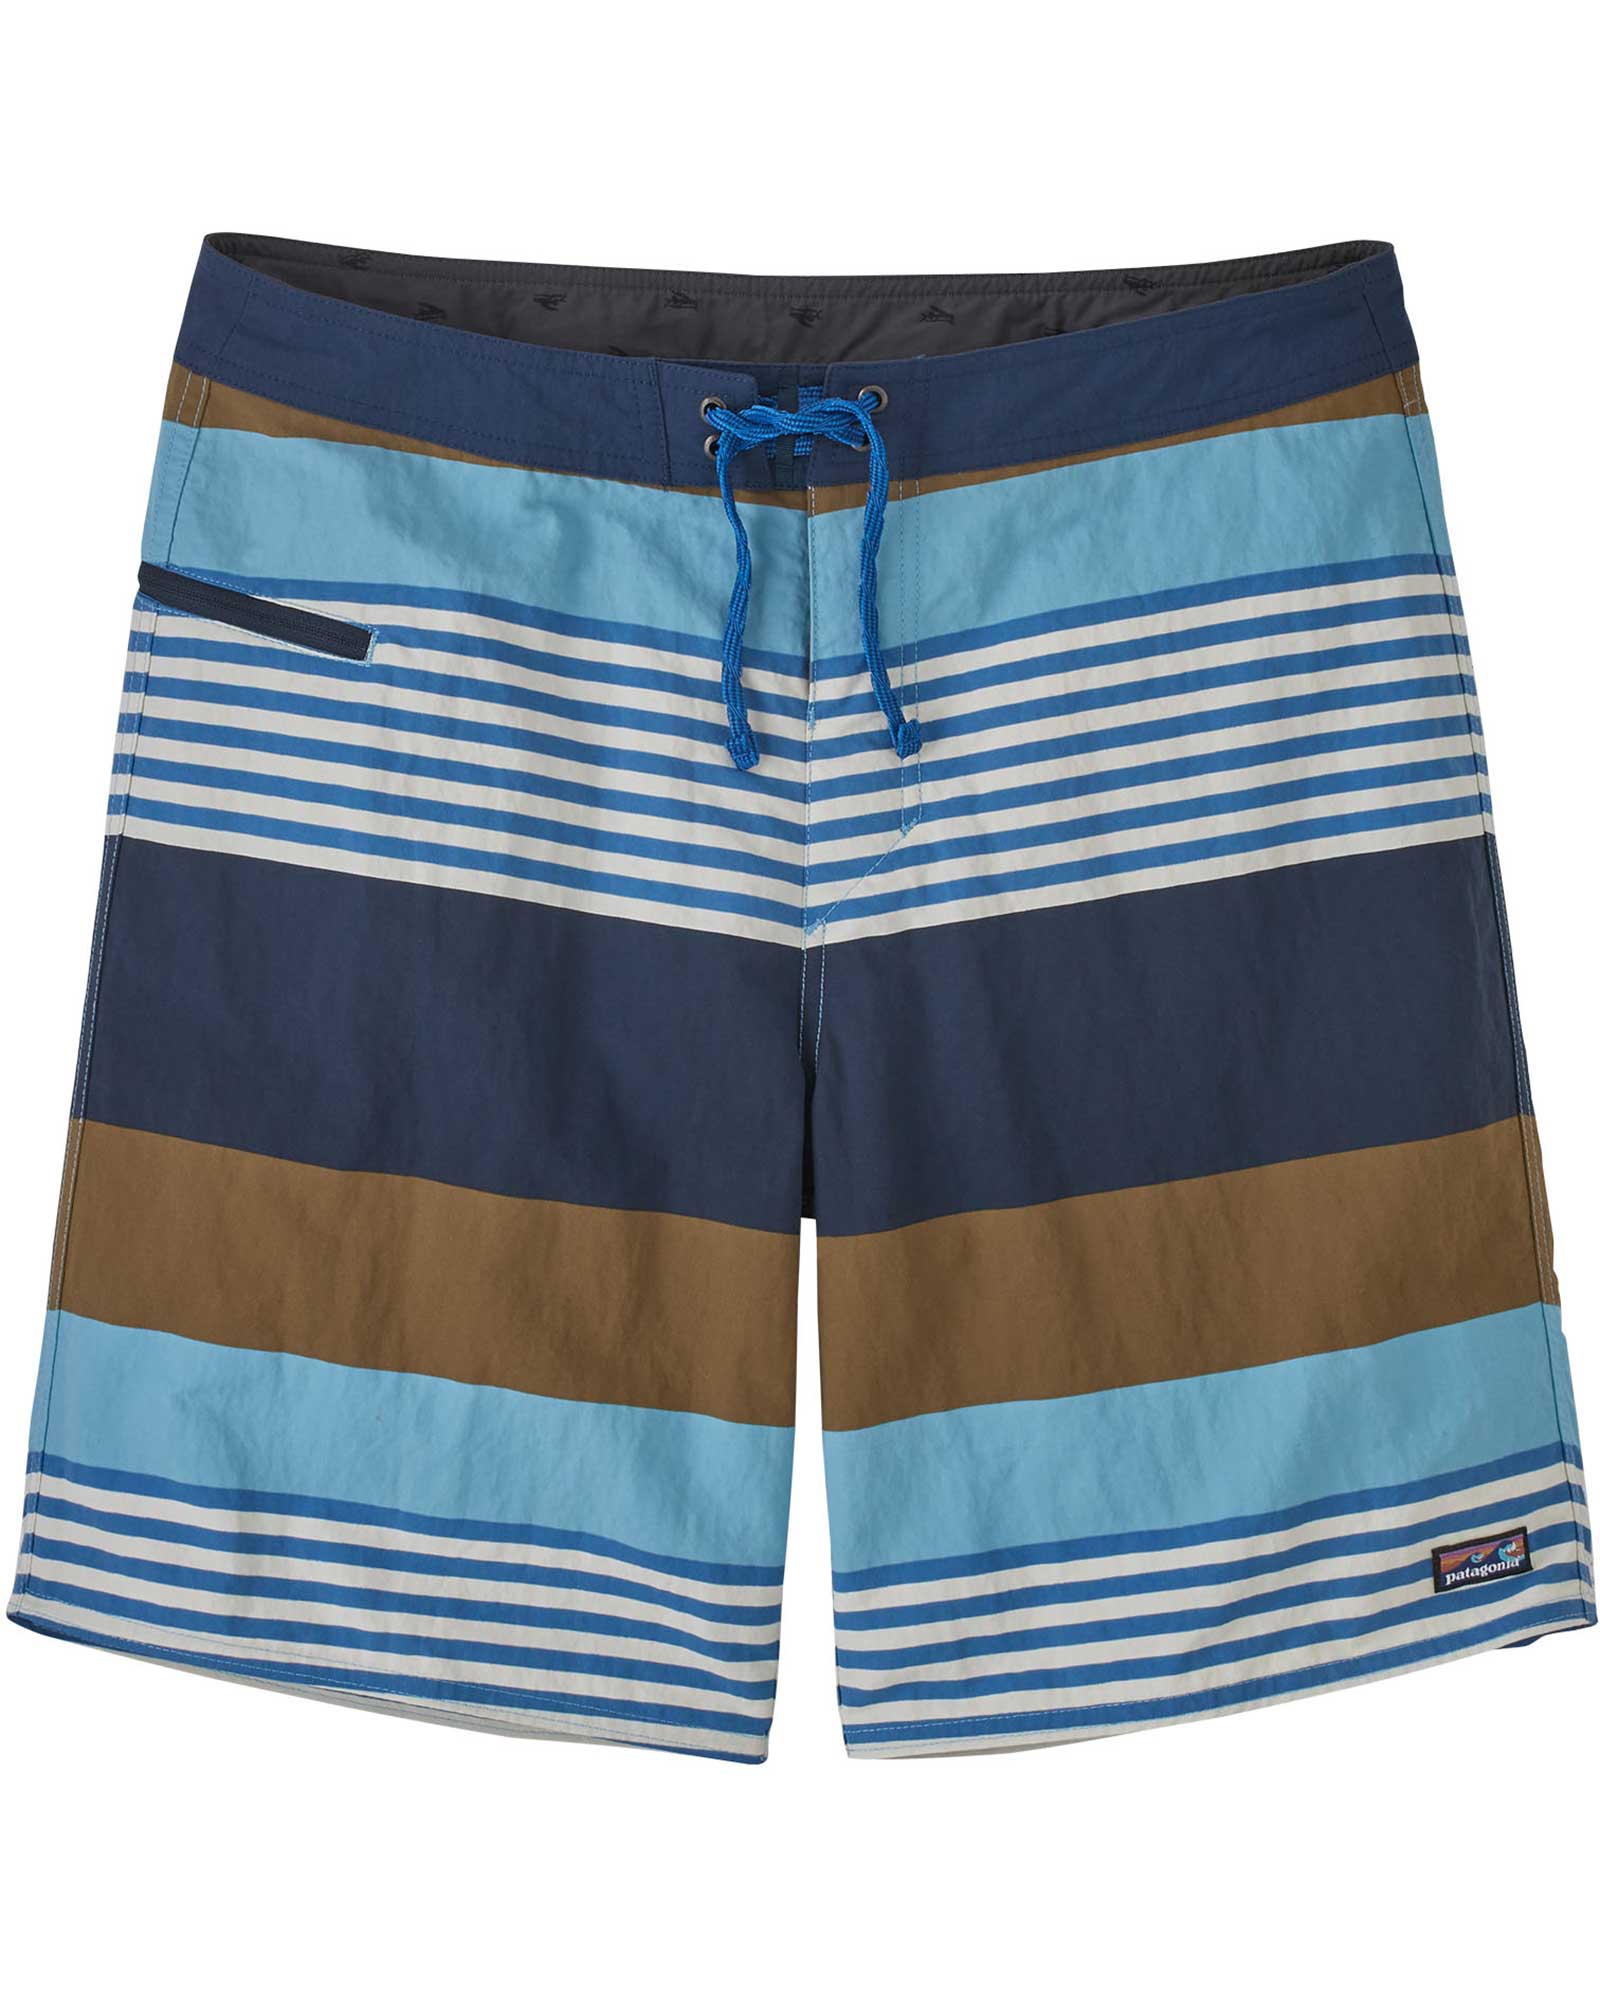 Patagonia Wavefarer Men’s 19" Board Shorts - Lago Blue/Fitz Stripe 30"